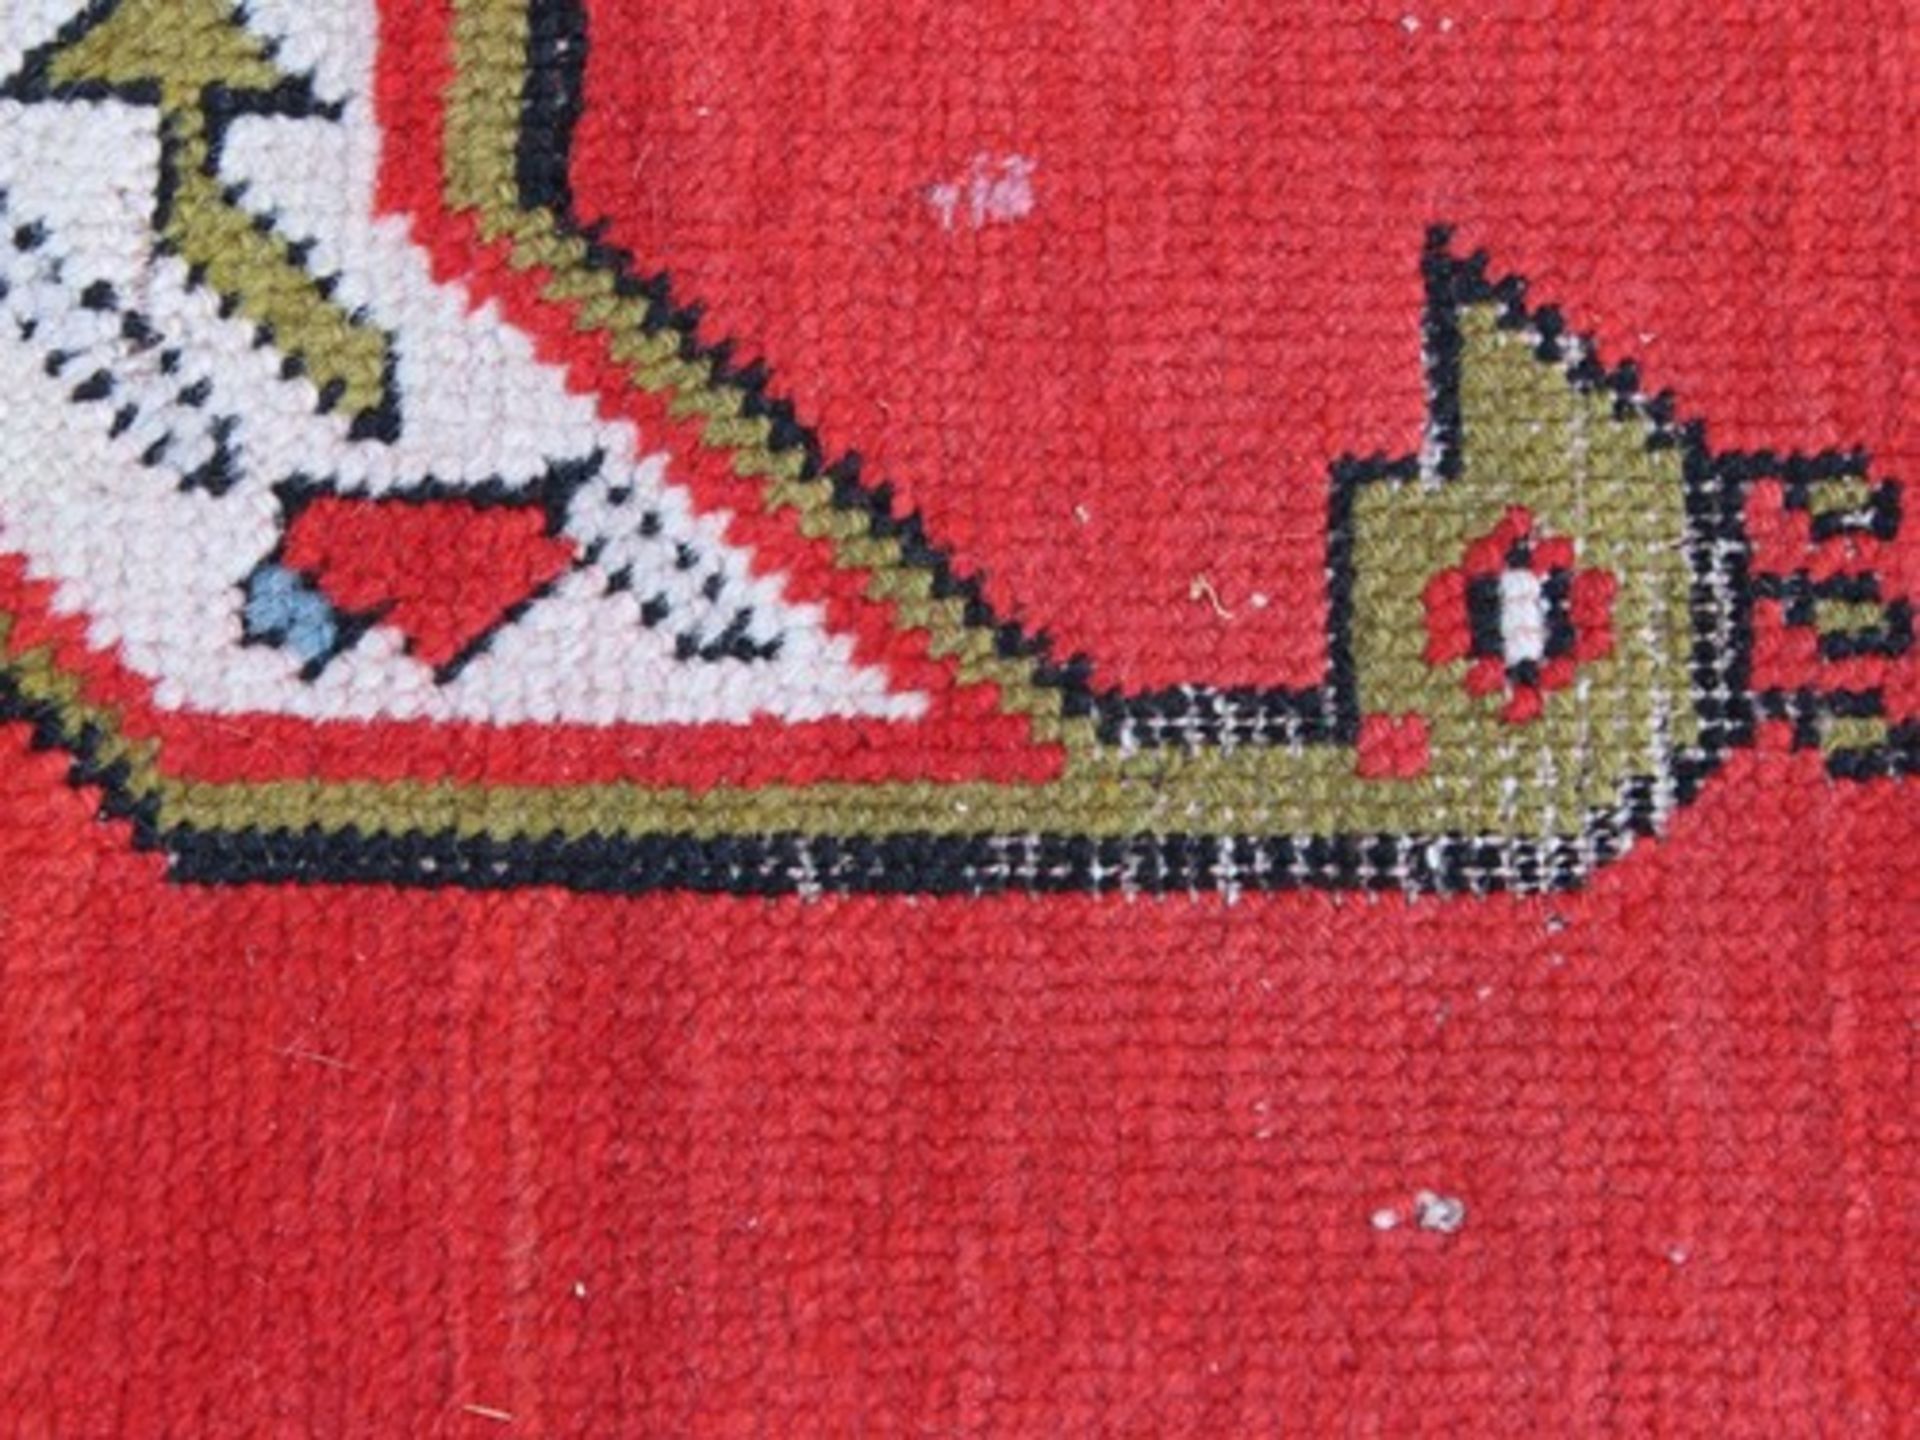 Orientbrückeum 1920/30, Kaukasus, Wolle/Wolle, wohl datiert 1344 / 1925, kräftig roter Fond, - Image 4 of 7